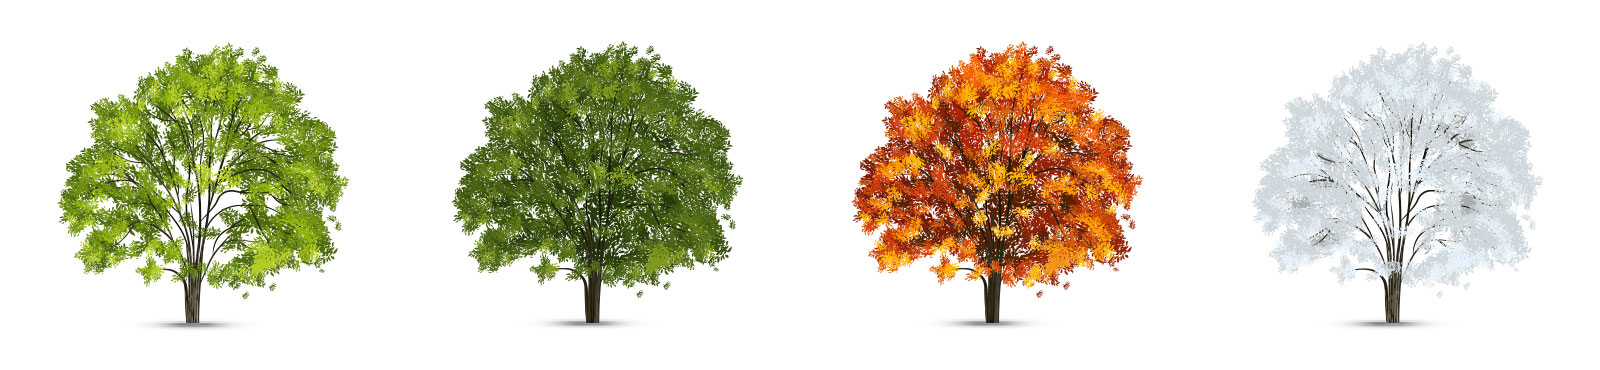 single tree changing through the seasons